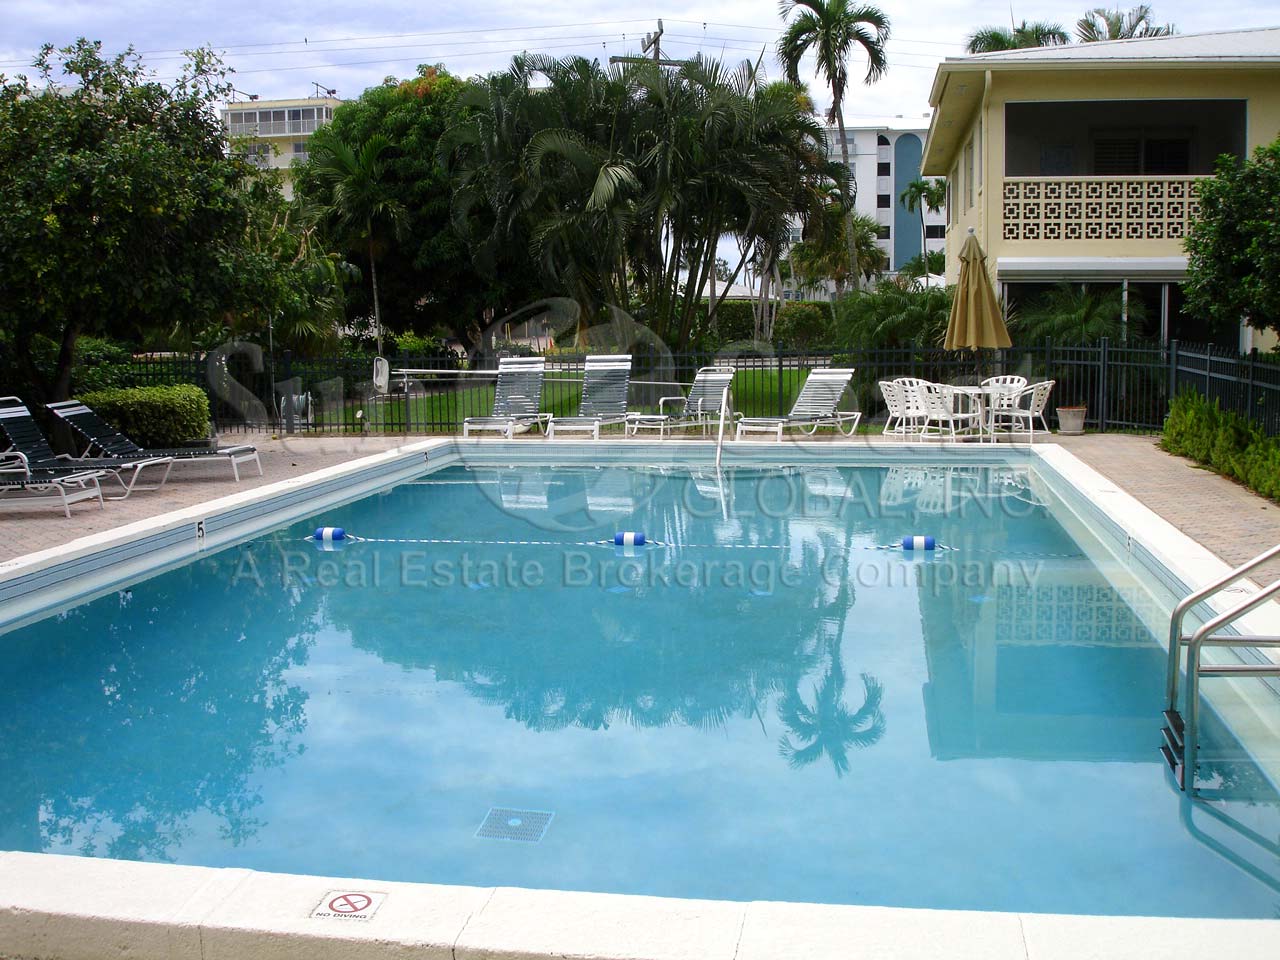 Palm Bay Villas Community Pool